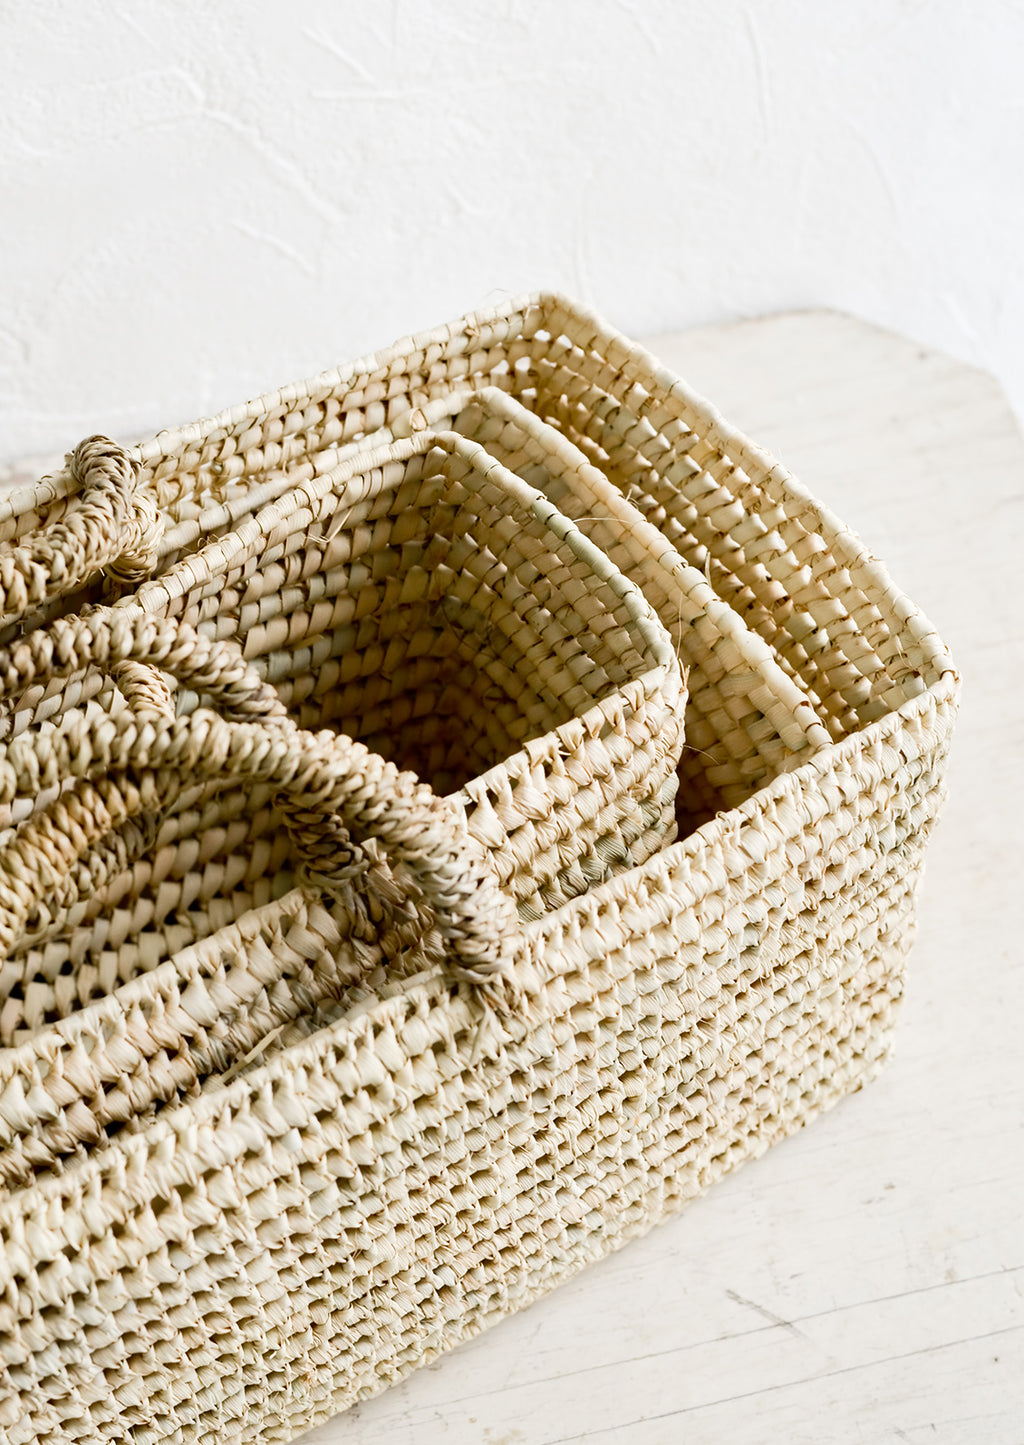 3: Palm leaf baskets in narrow, rectangular shape, nested together.